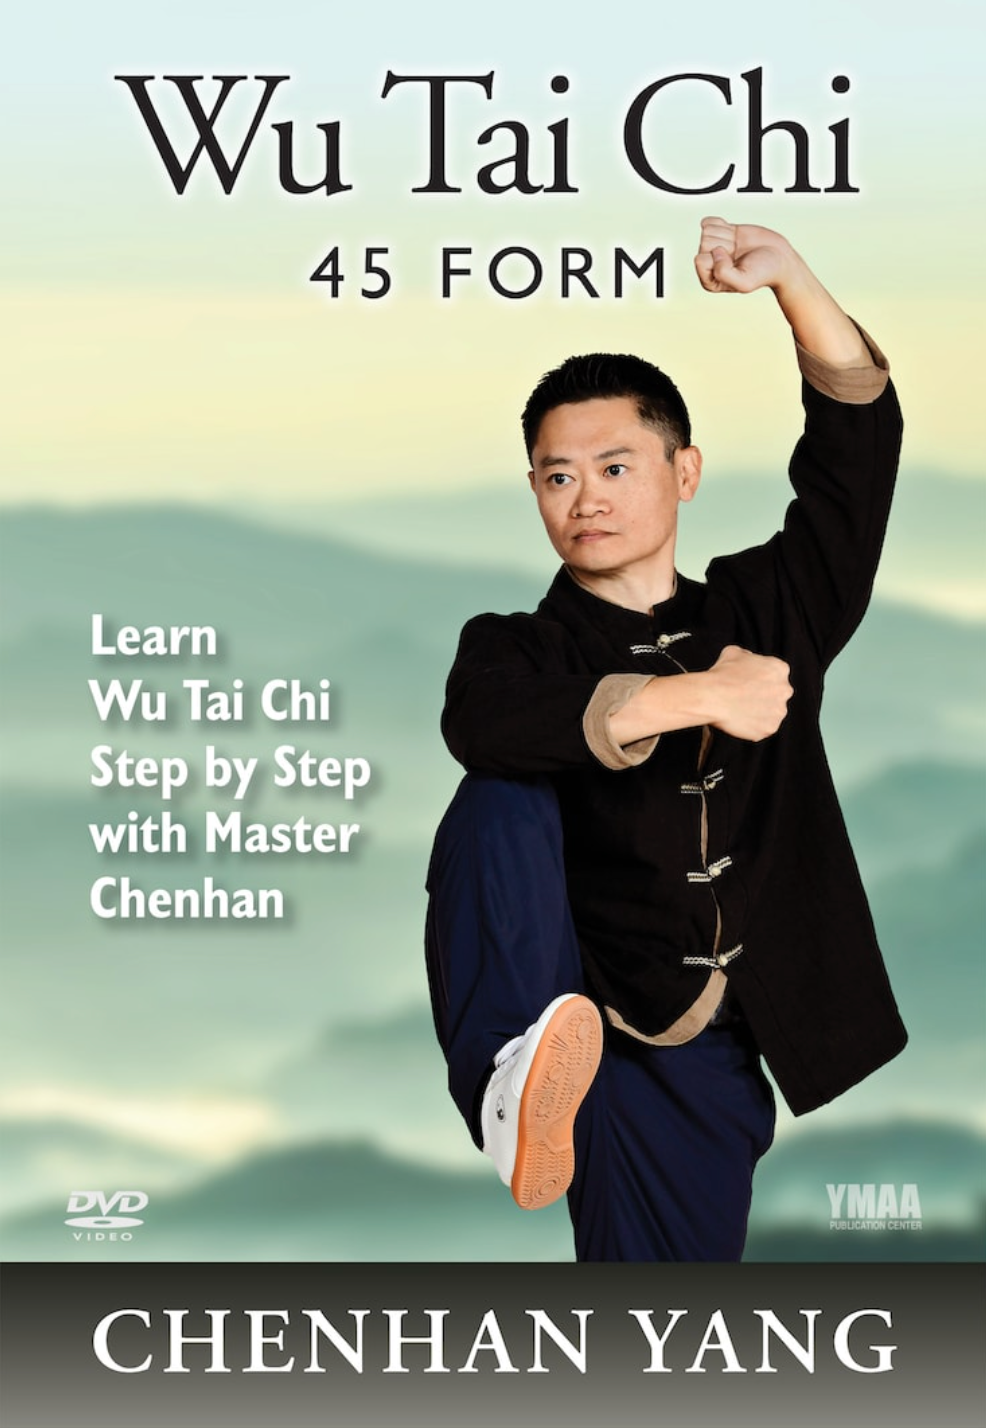 Wu Tai Chi DVD by Chenhan Yang - Budovideos Inc